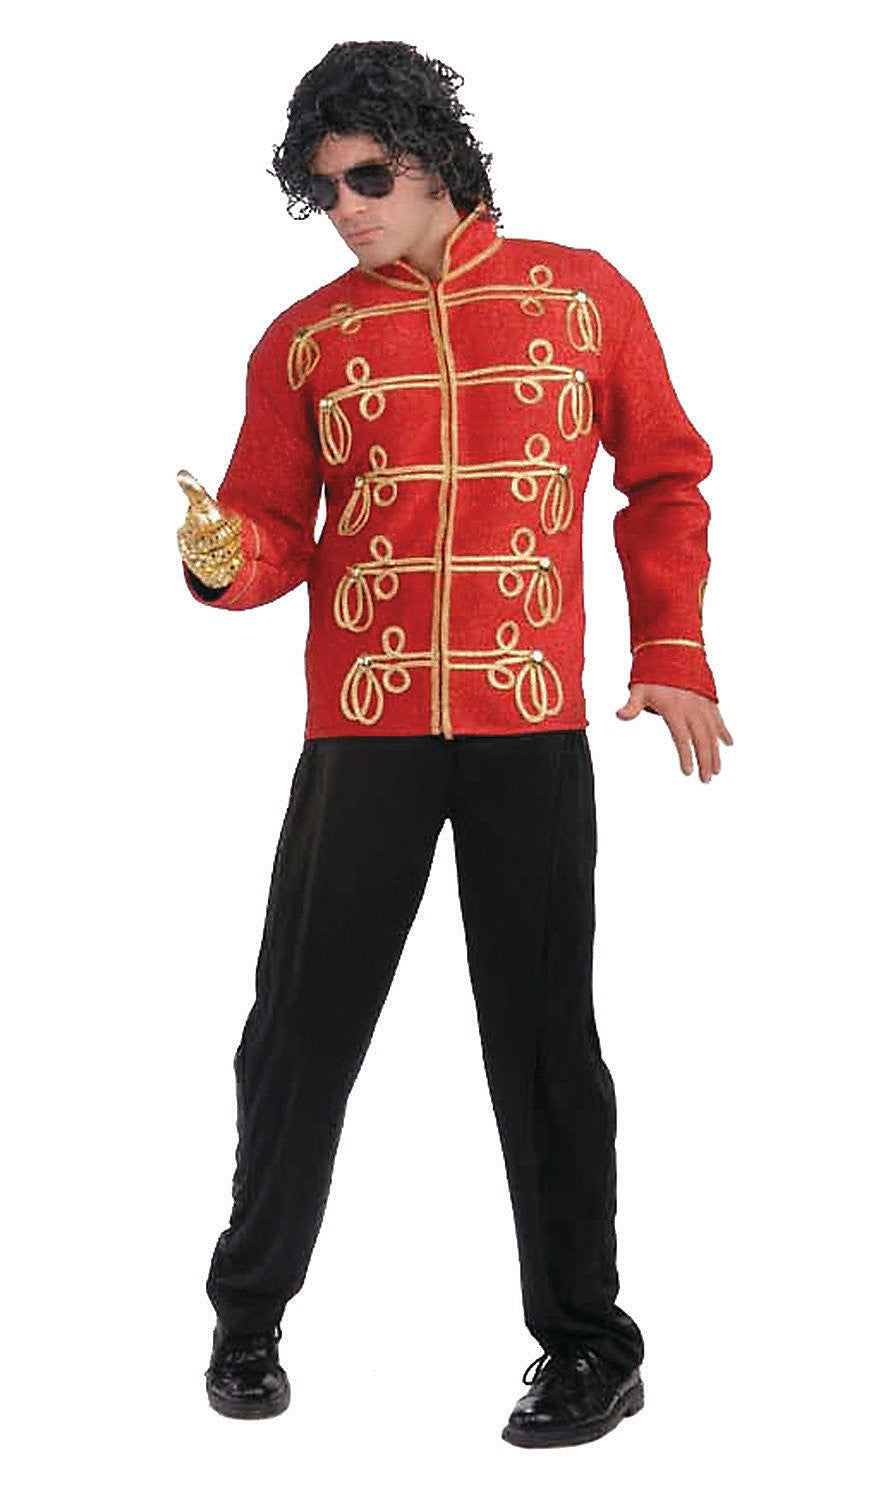 Michael Jackson Red Military Jacket Costume 889772 – FantasiaWear